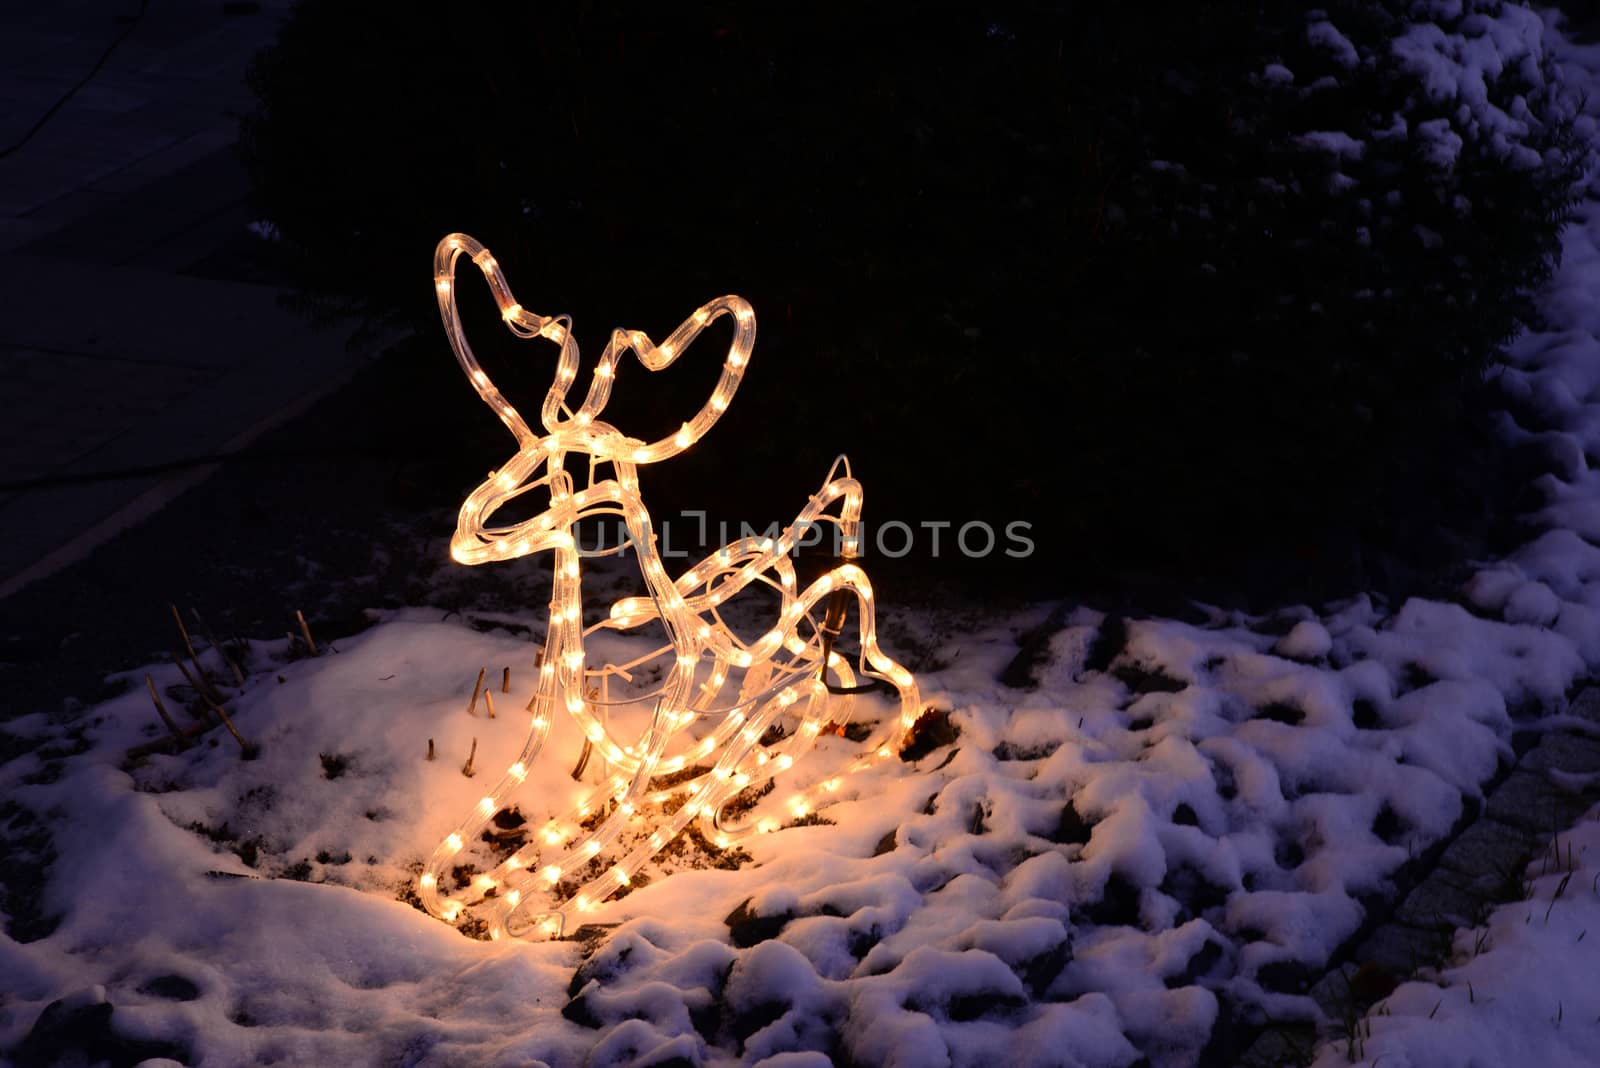 Lighted christmas reindeer by dk_photos